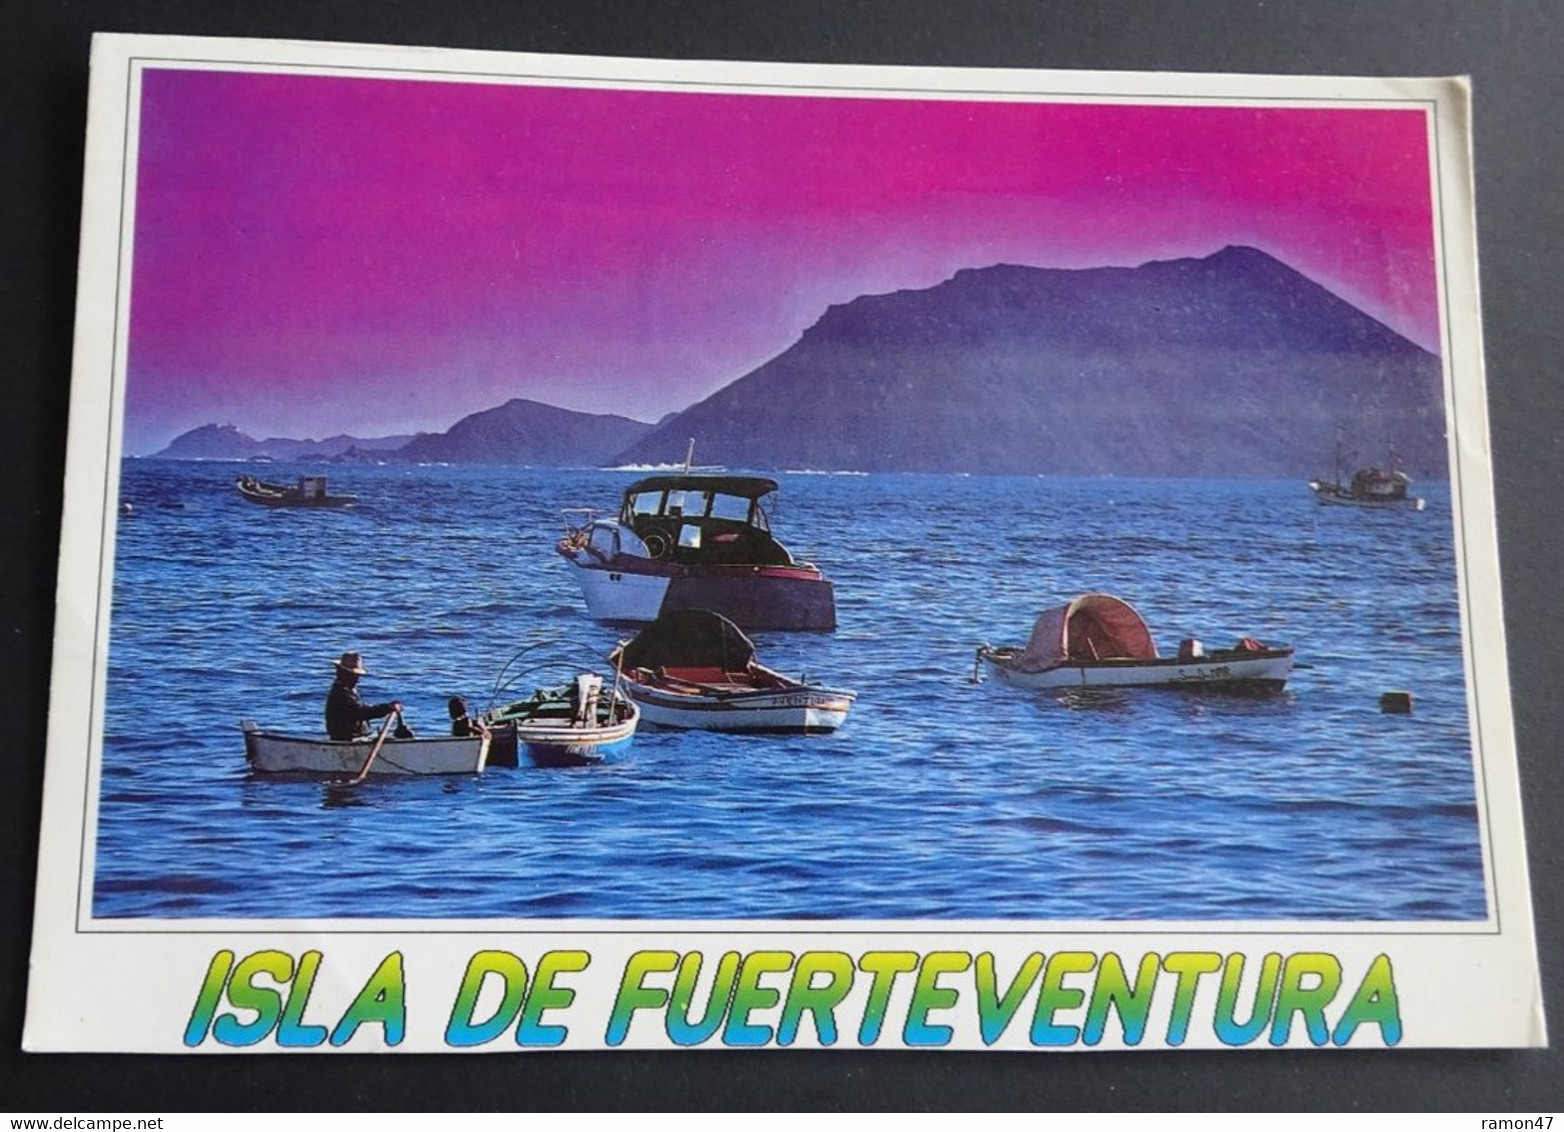 Isla De Fuerteventura - Lobo Island - Fuerteventura